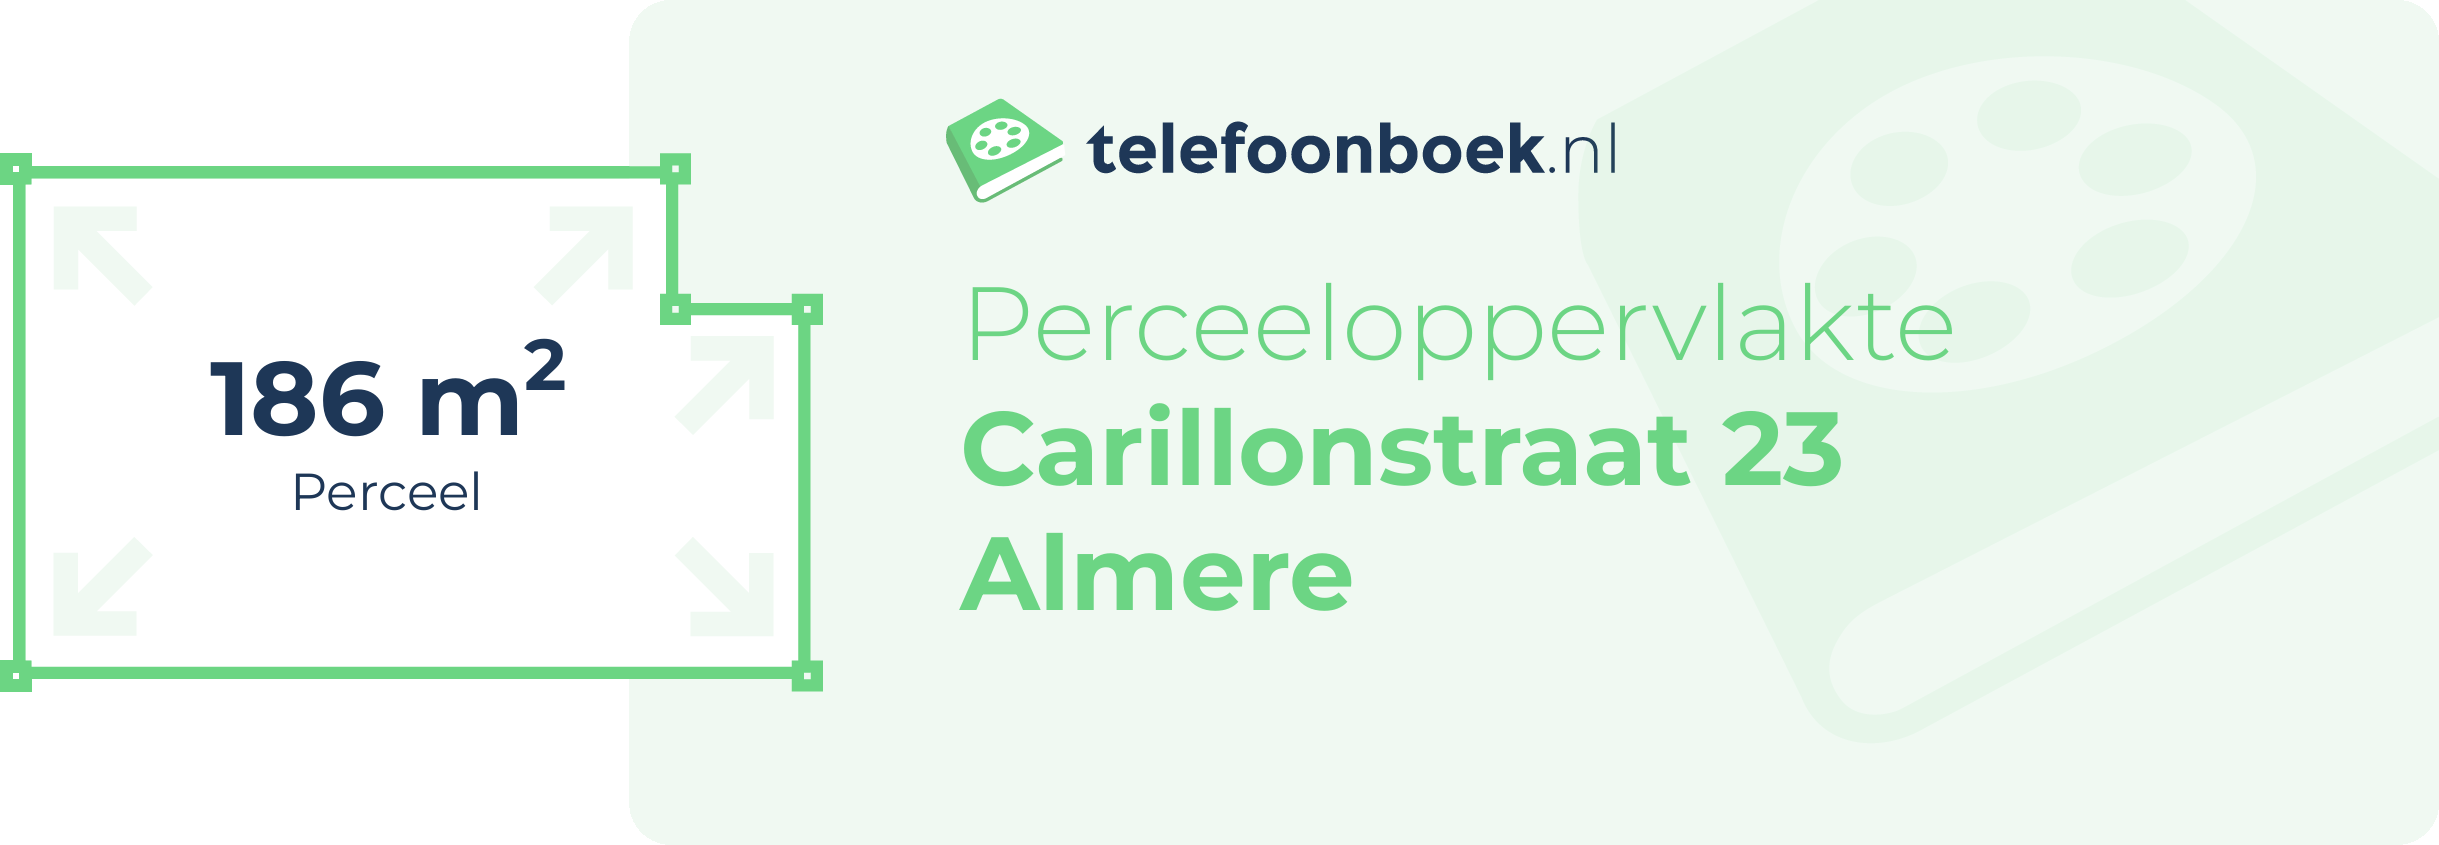 Perceeloppervlakte Carillonstraat 23 Almere